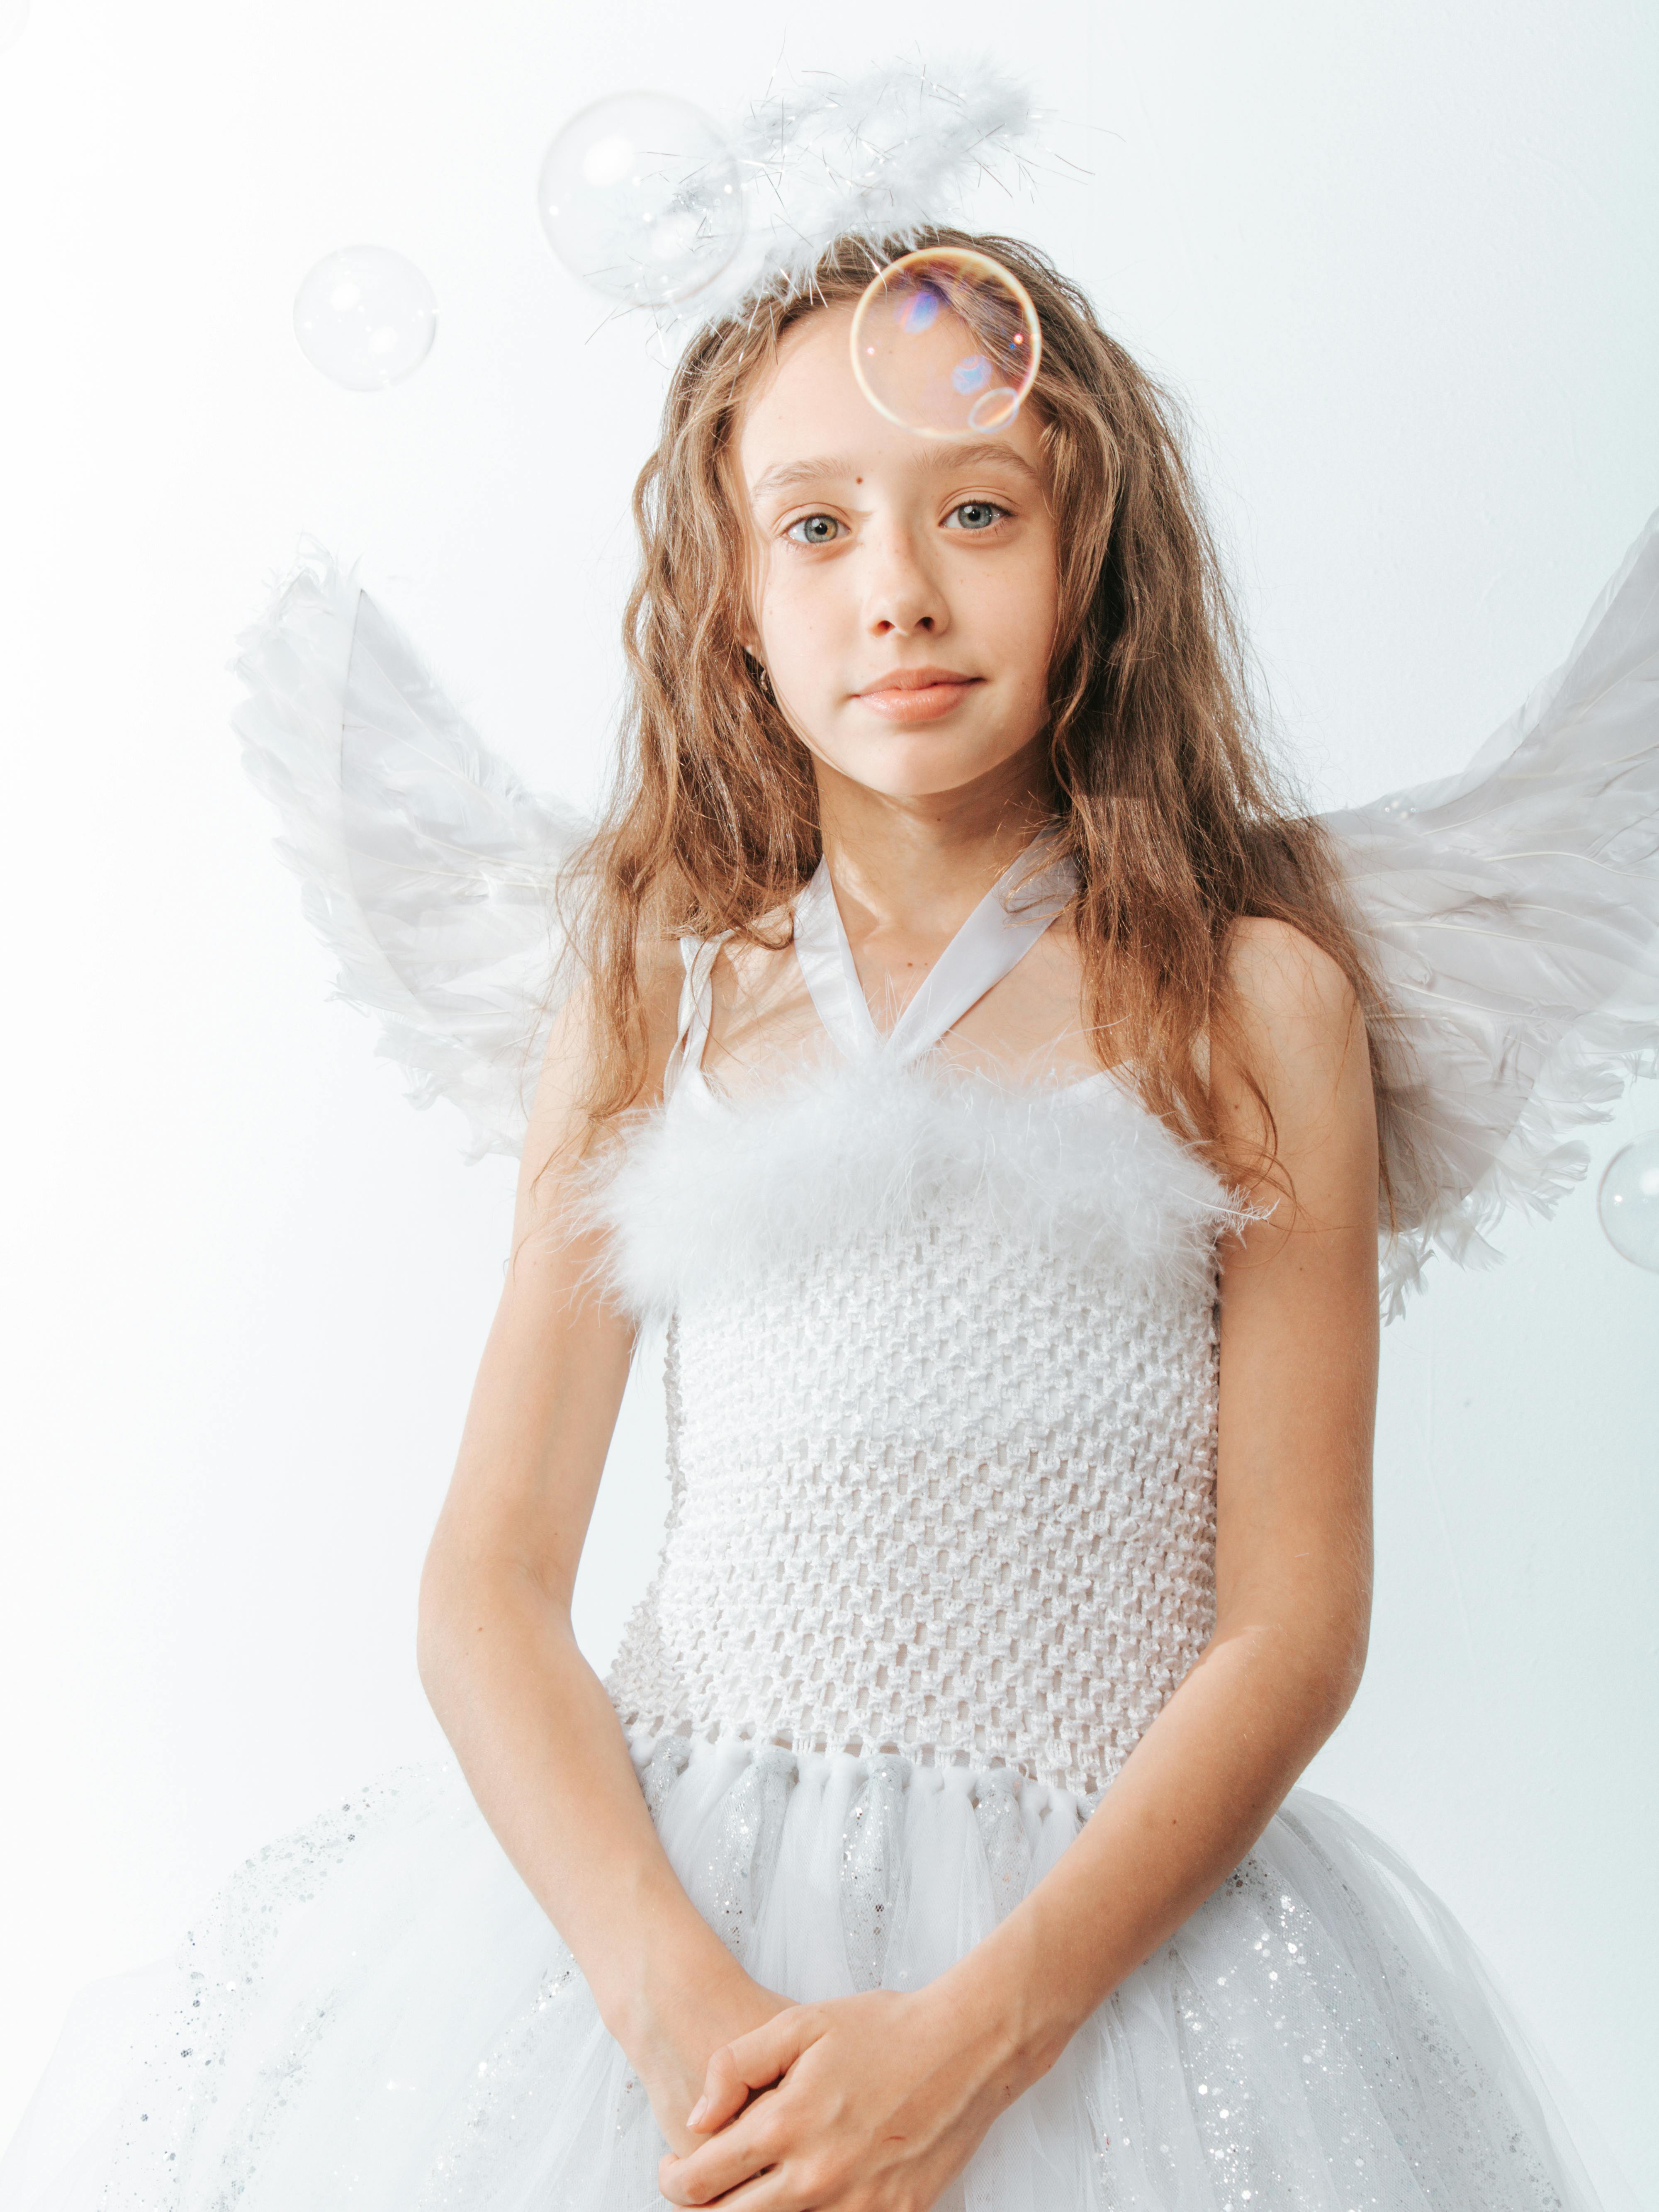 Cute Girl in Angel Costume · Free Stock Photo